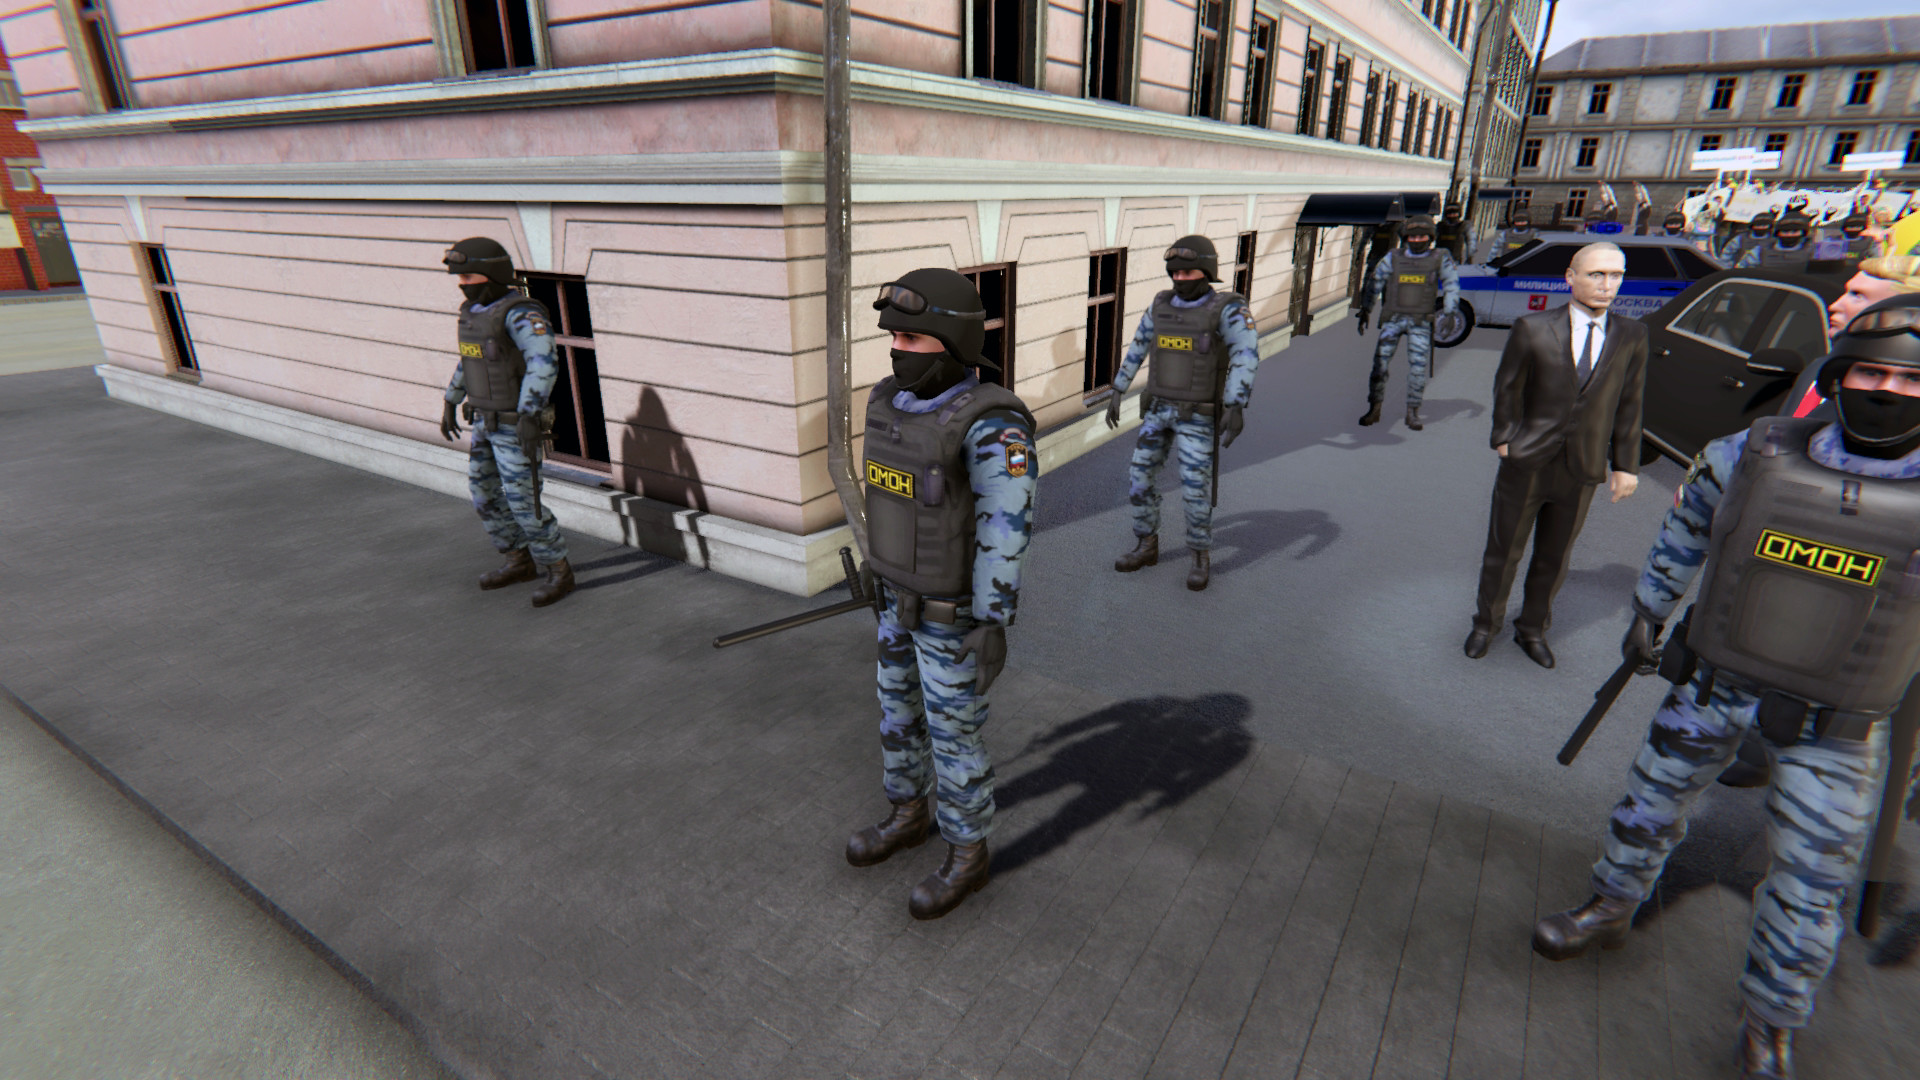 Save 51 On Omon Simulator On Steam - area 51 swat uniform roblox